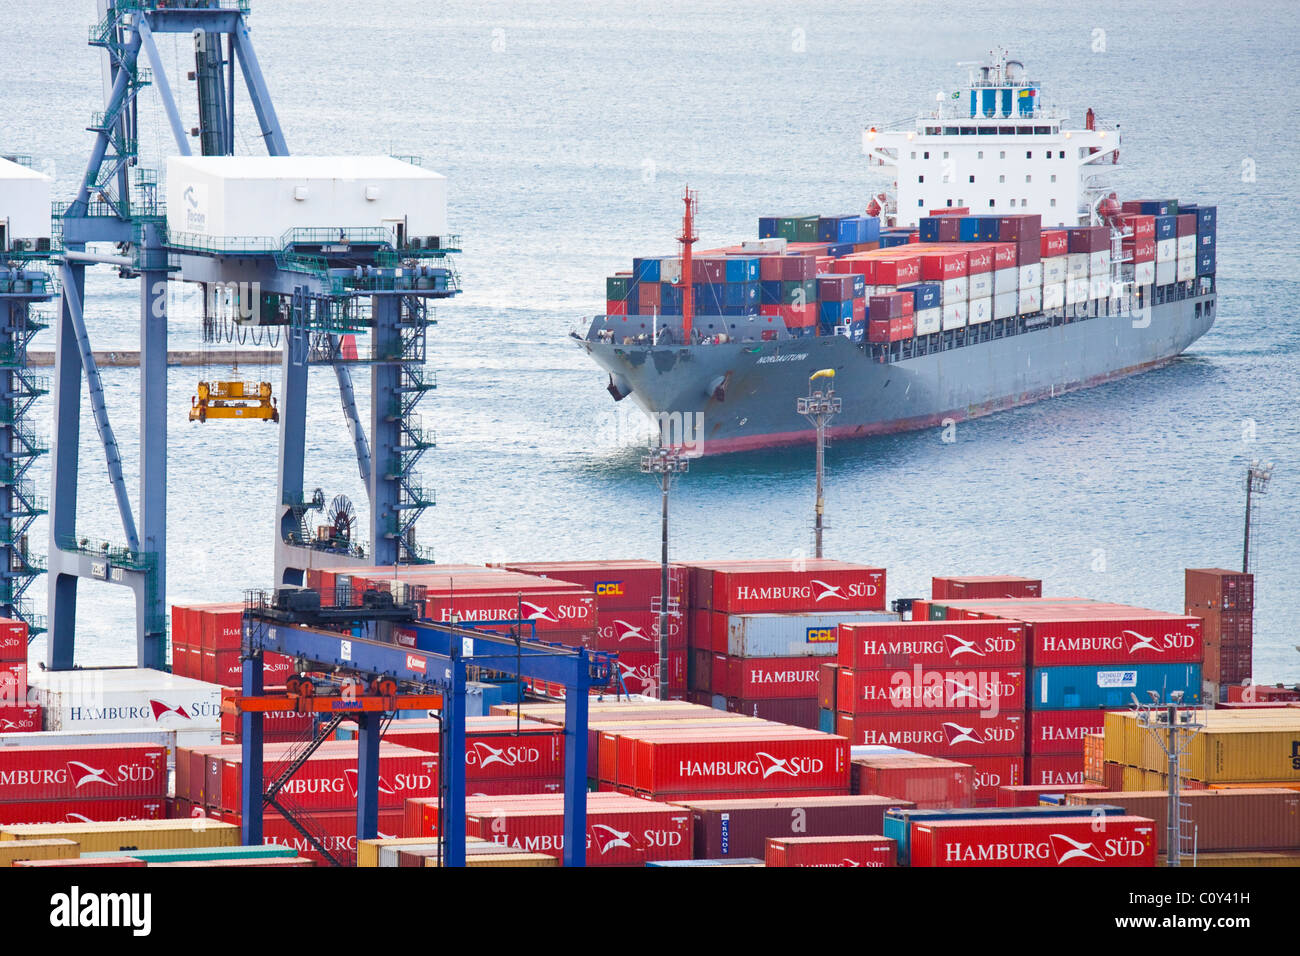 Port of Salvador, Brazil Stock Photo